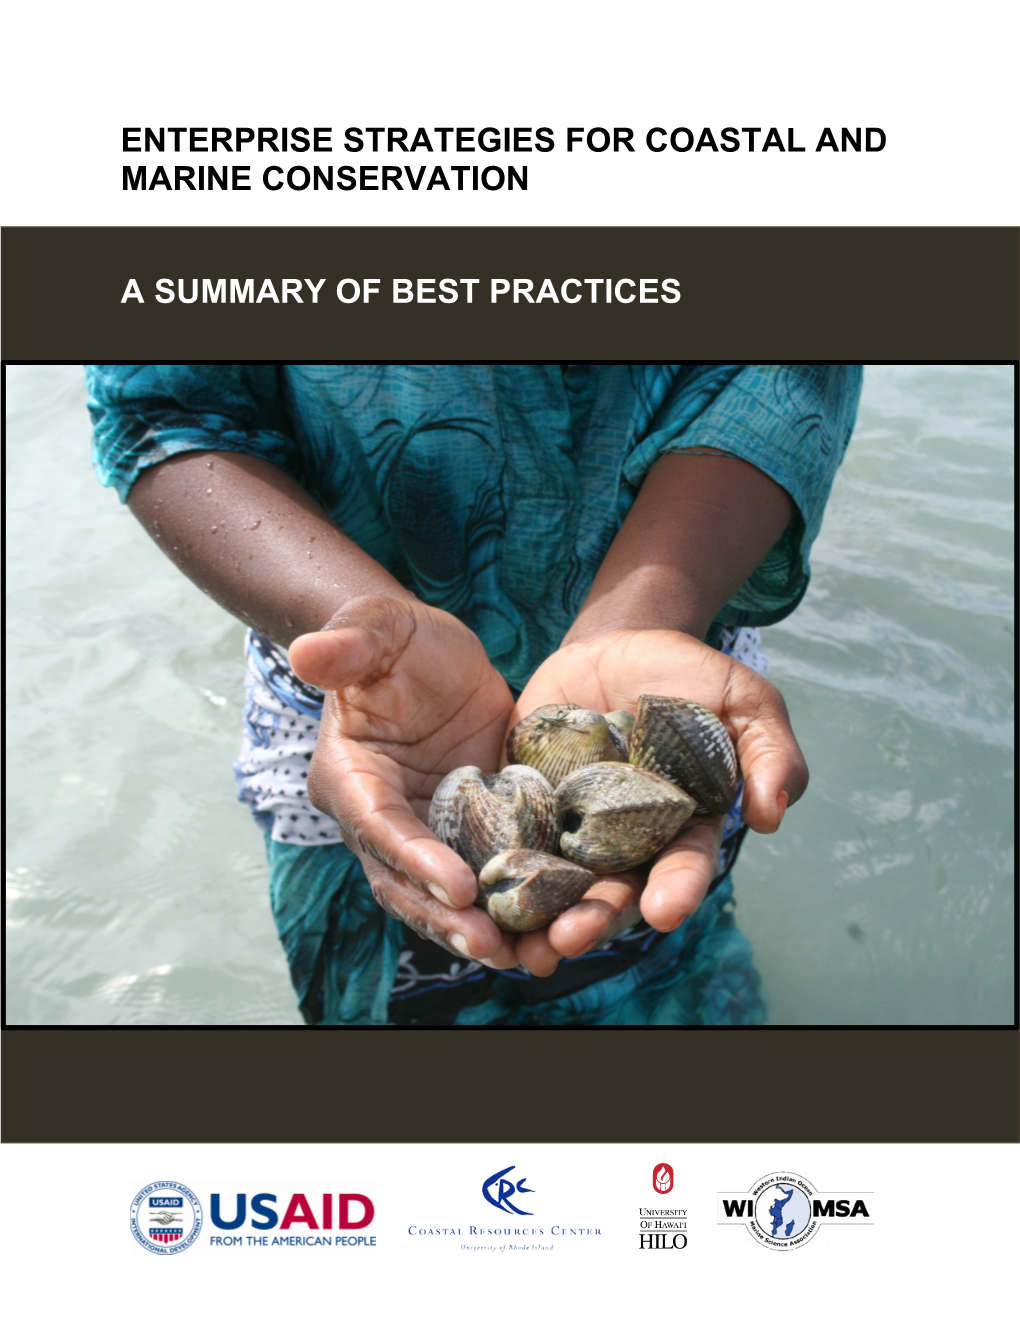 Enterprise Strategies for Coastal and Marine Conservation